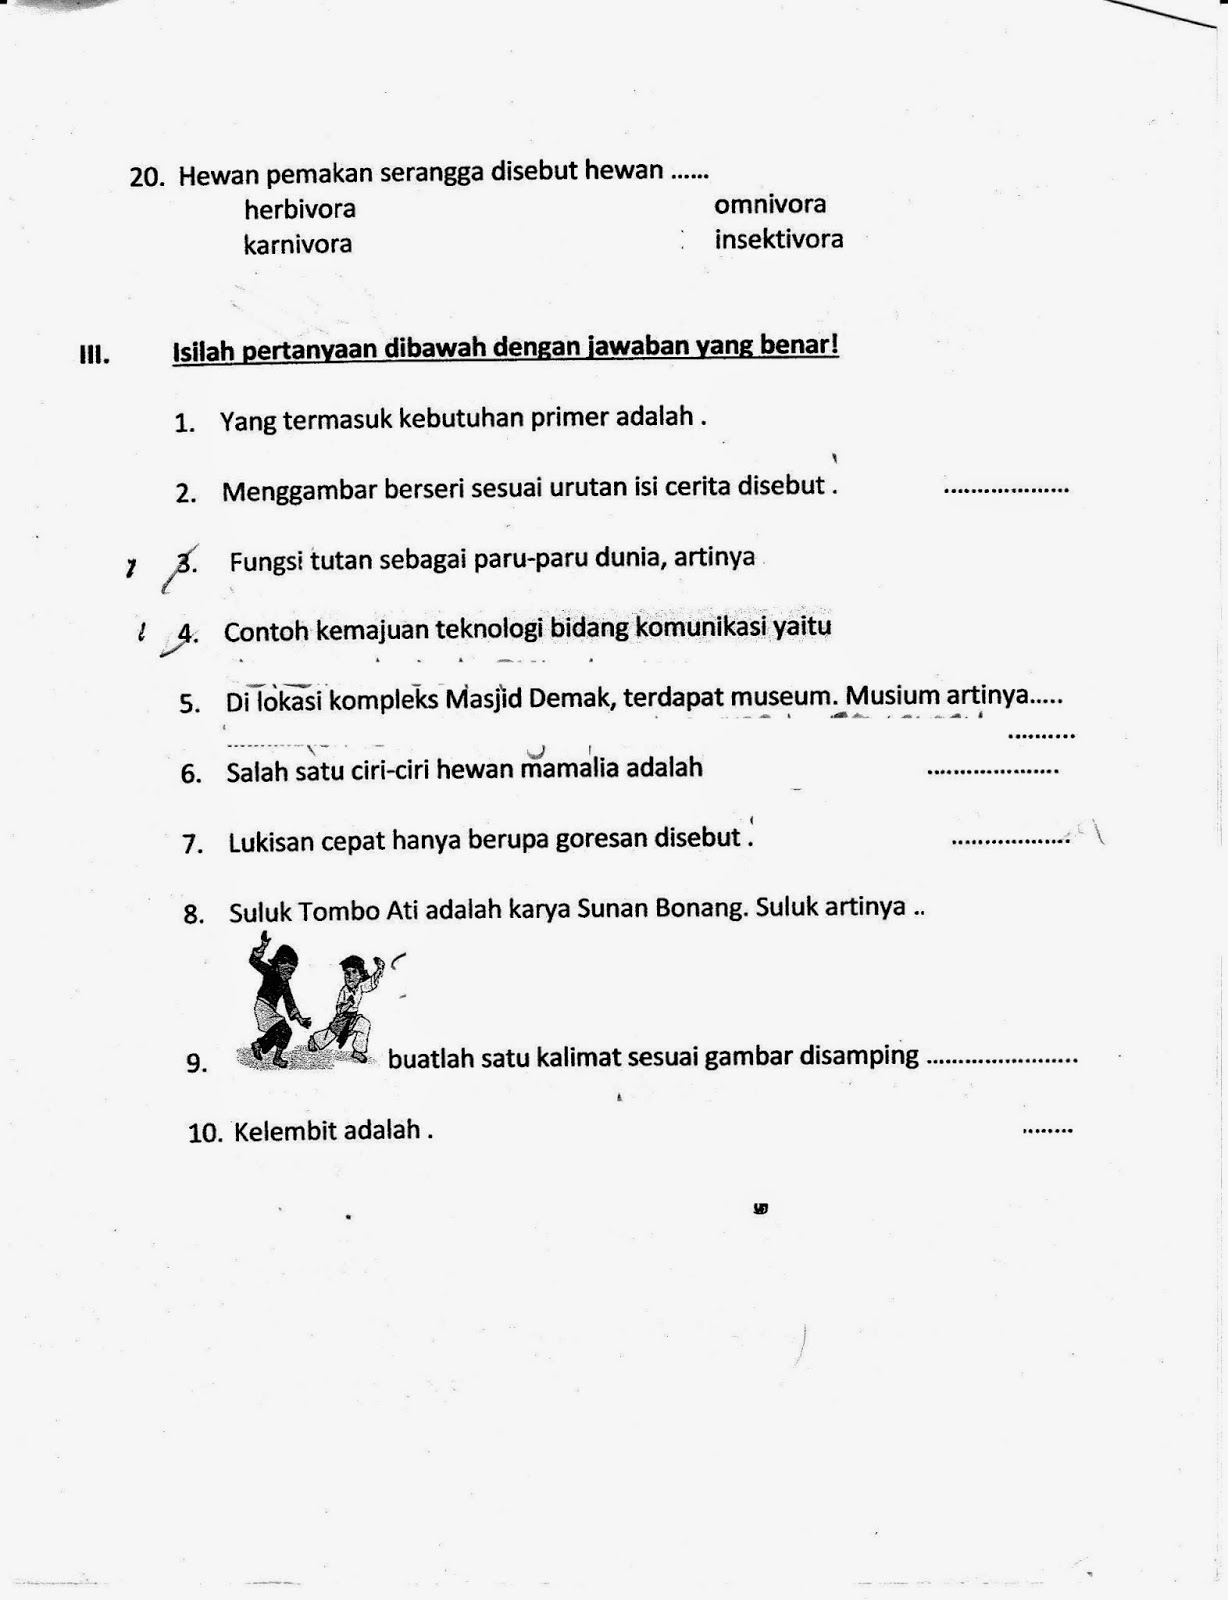 UTS Bhs Indonesia SD Kelas 5 Semester Genap TA2014 2015 Download Lengkap